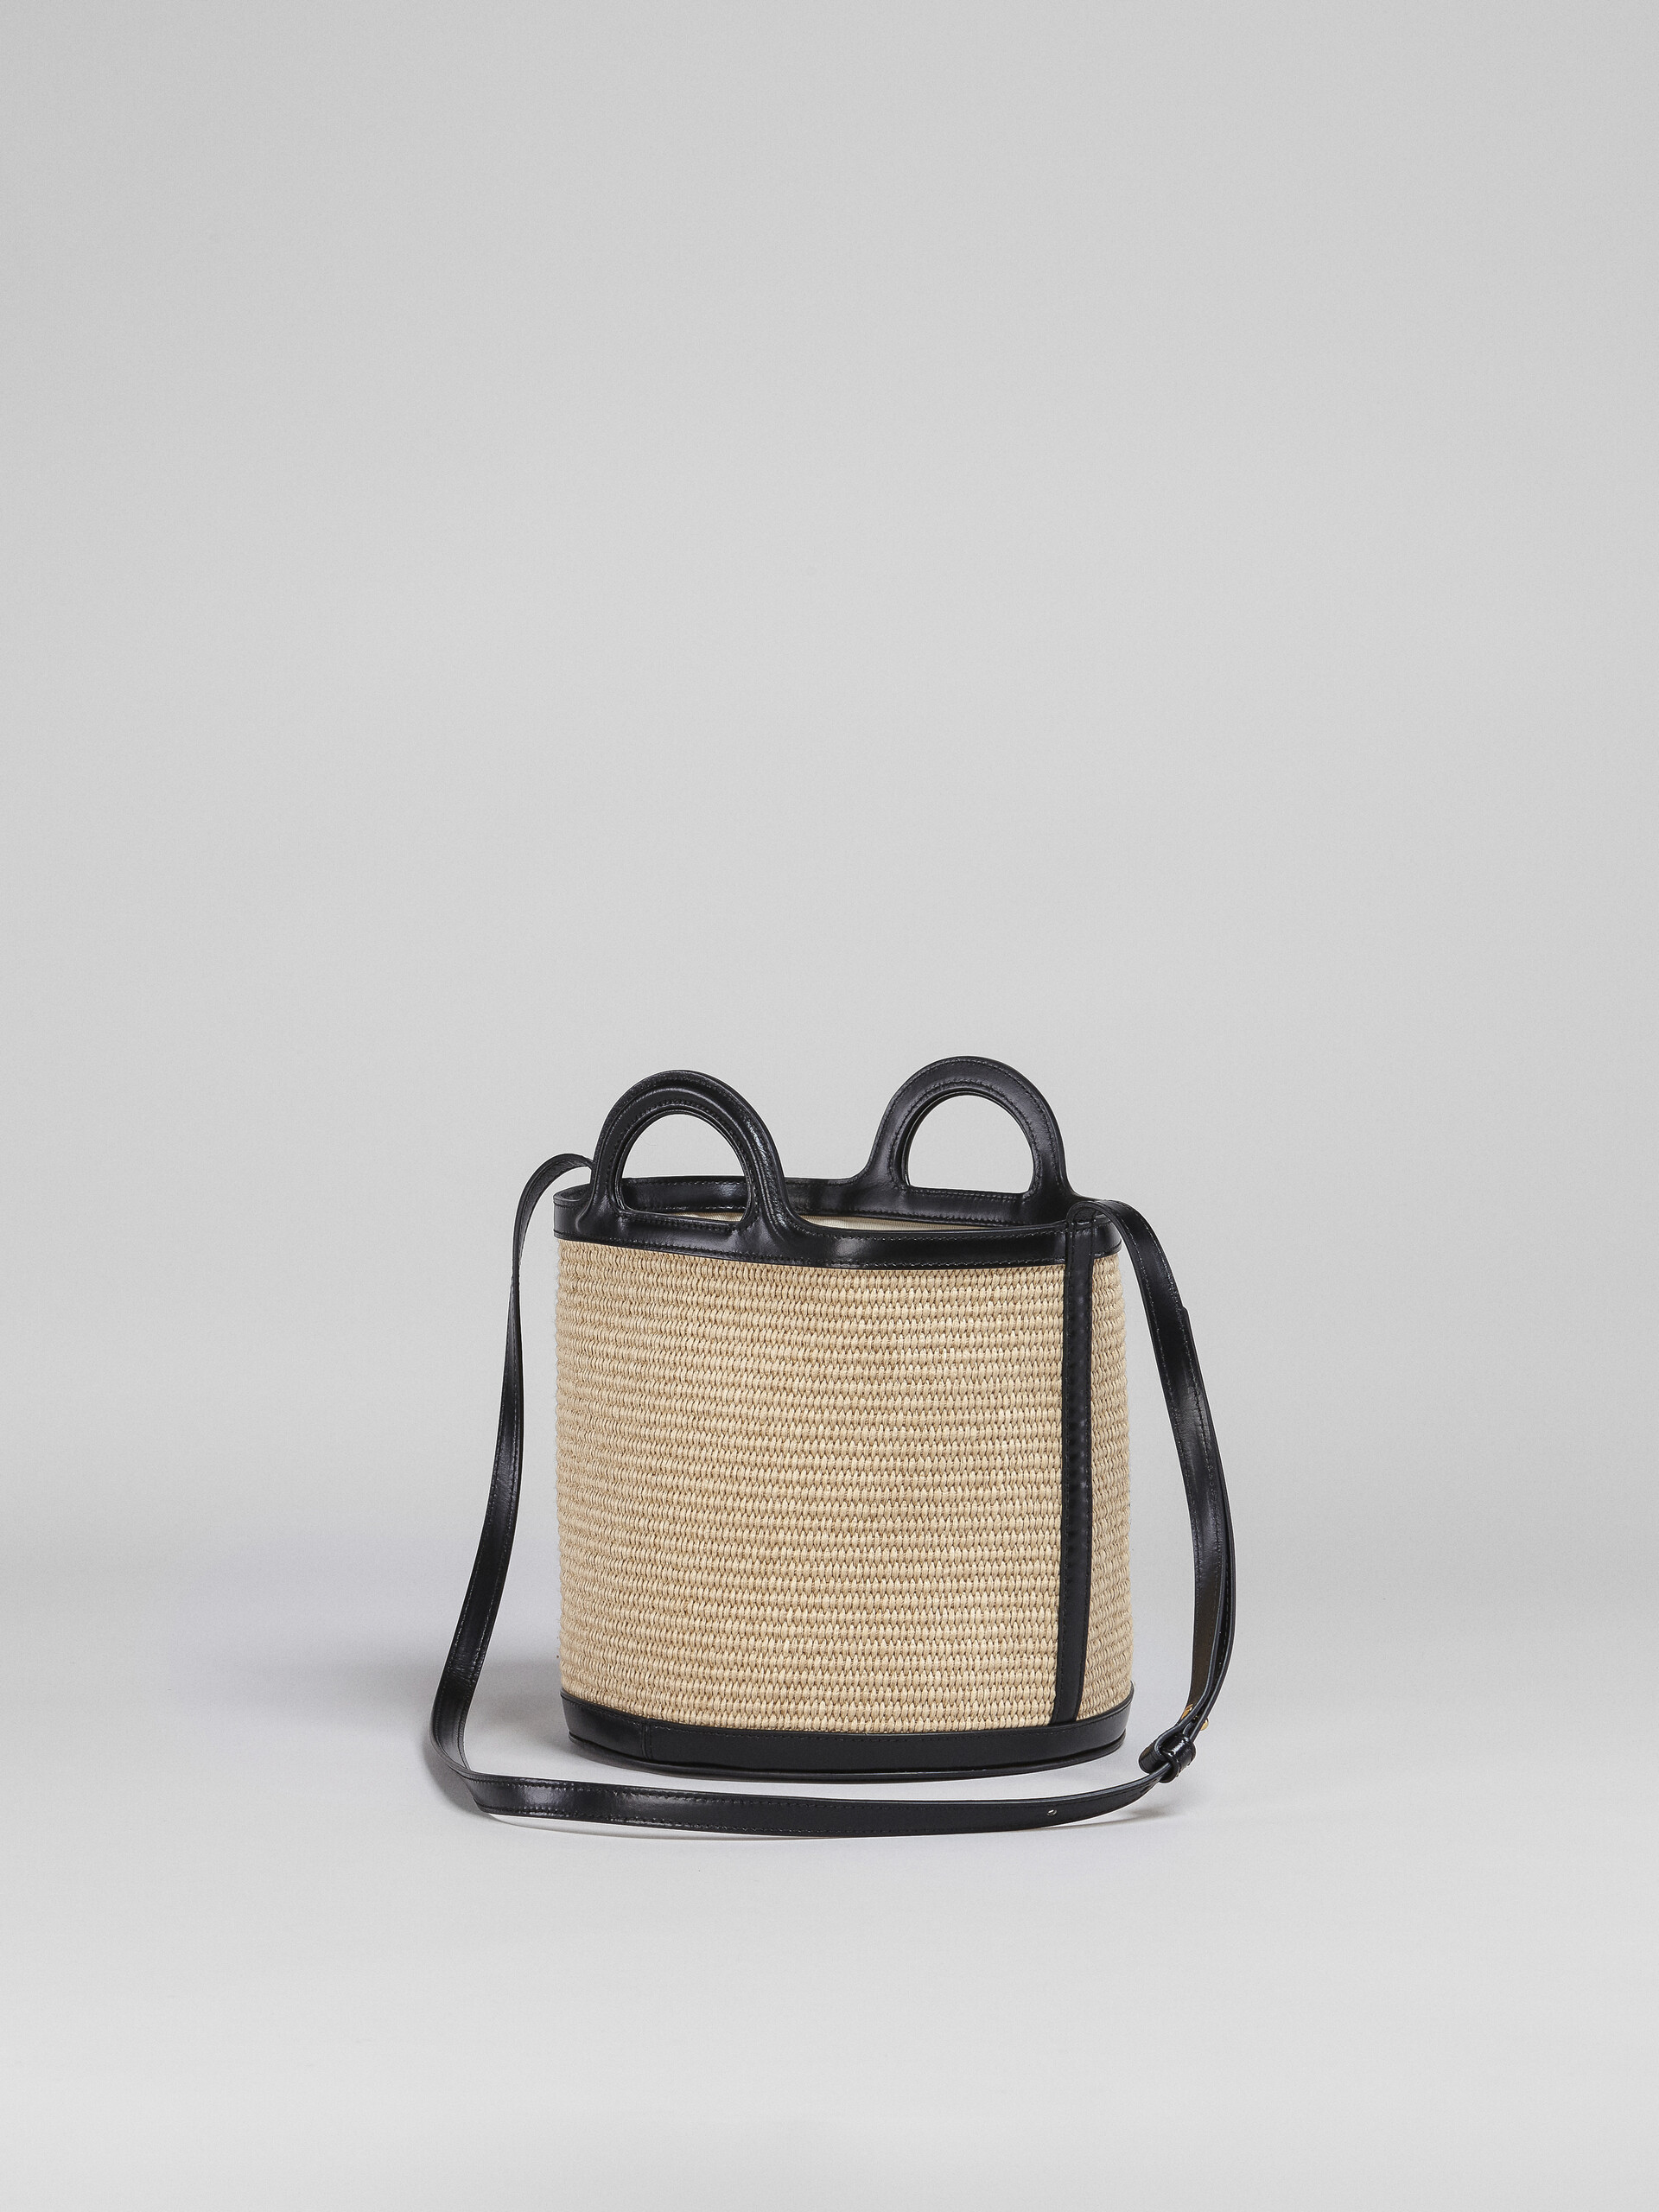 TROPICALIA small bucket bag  in black leather and raffia - Shoulder Bag - Image 3